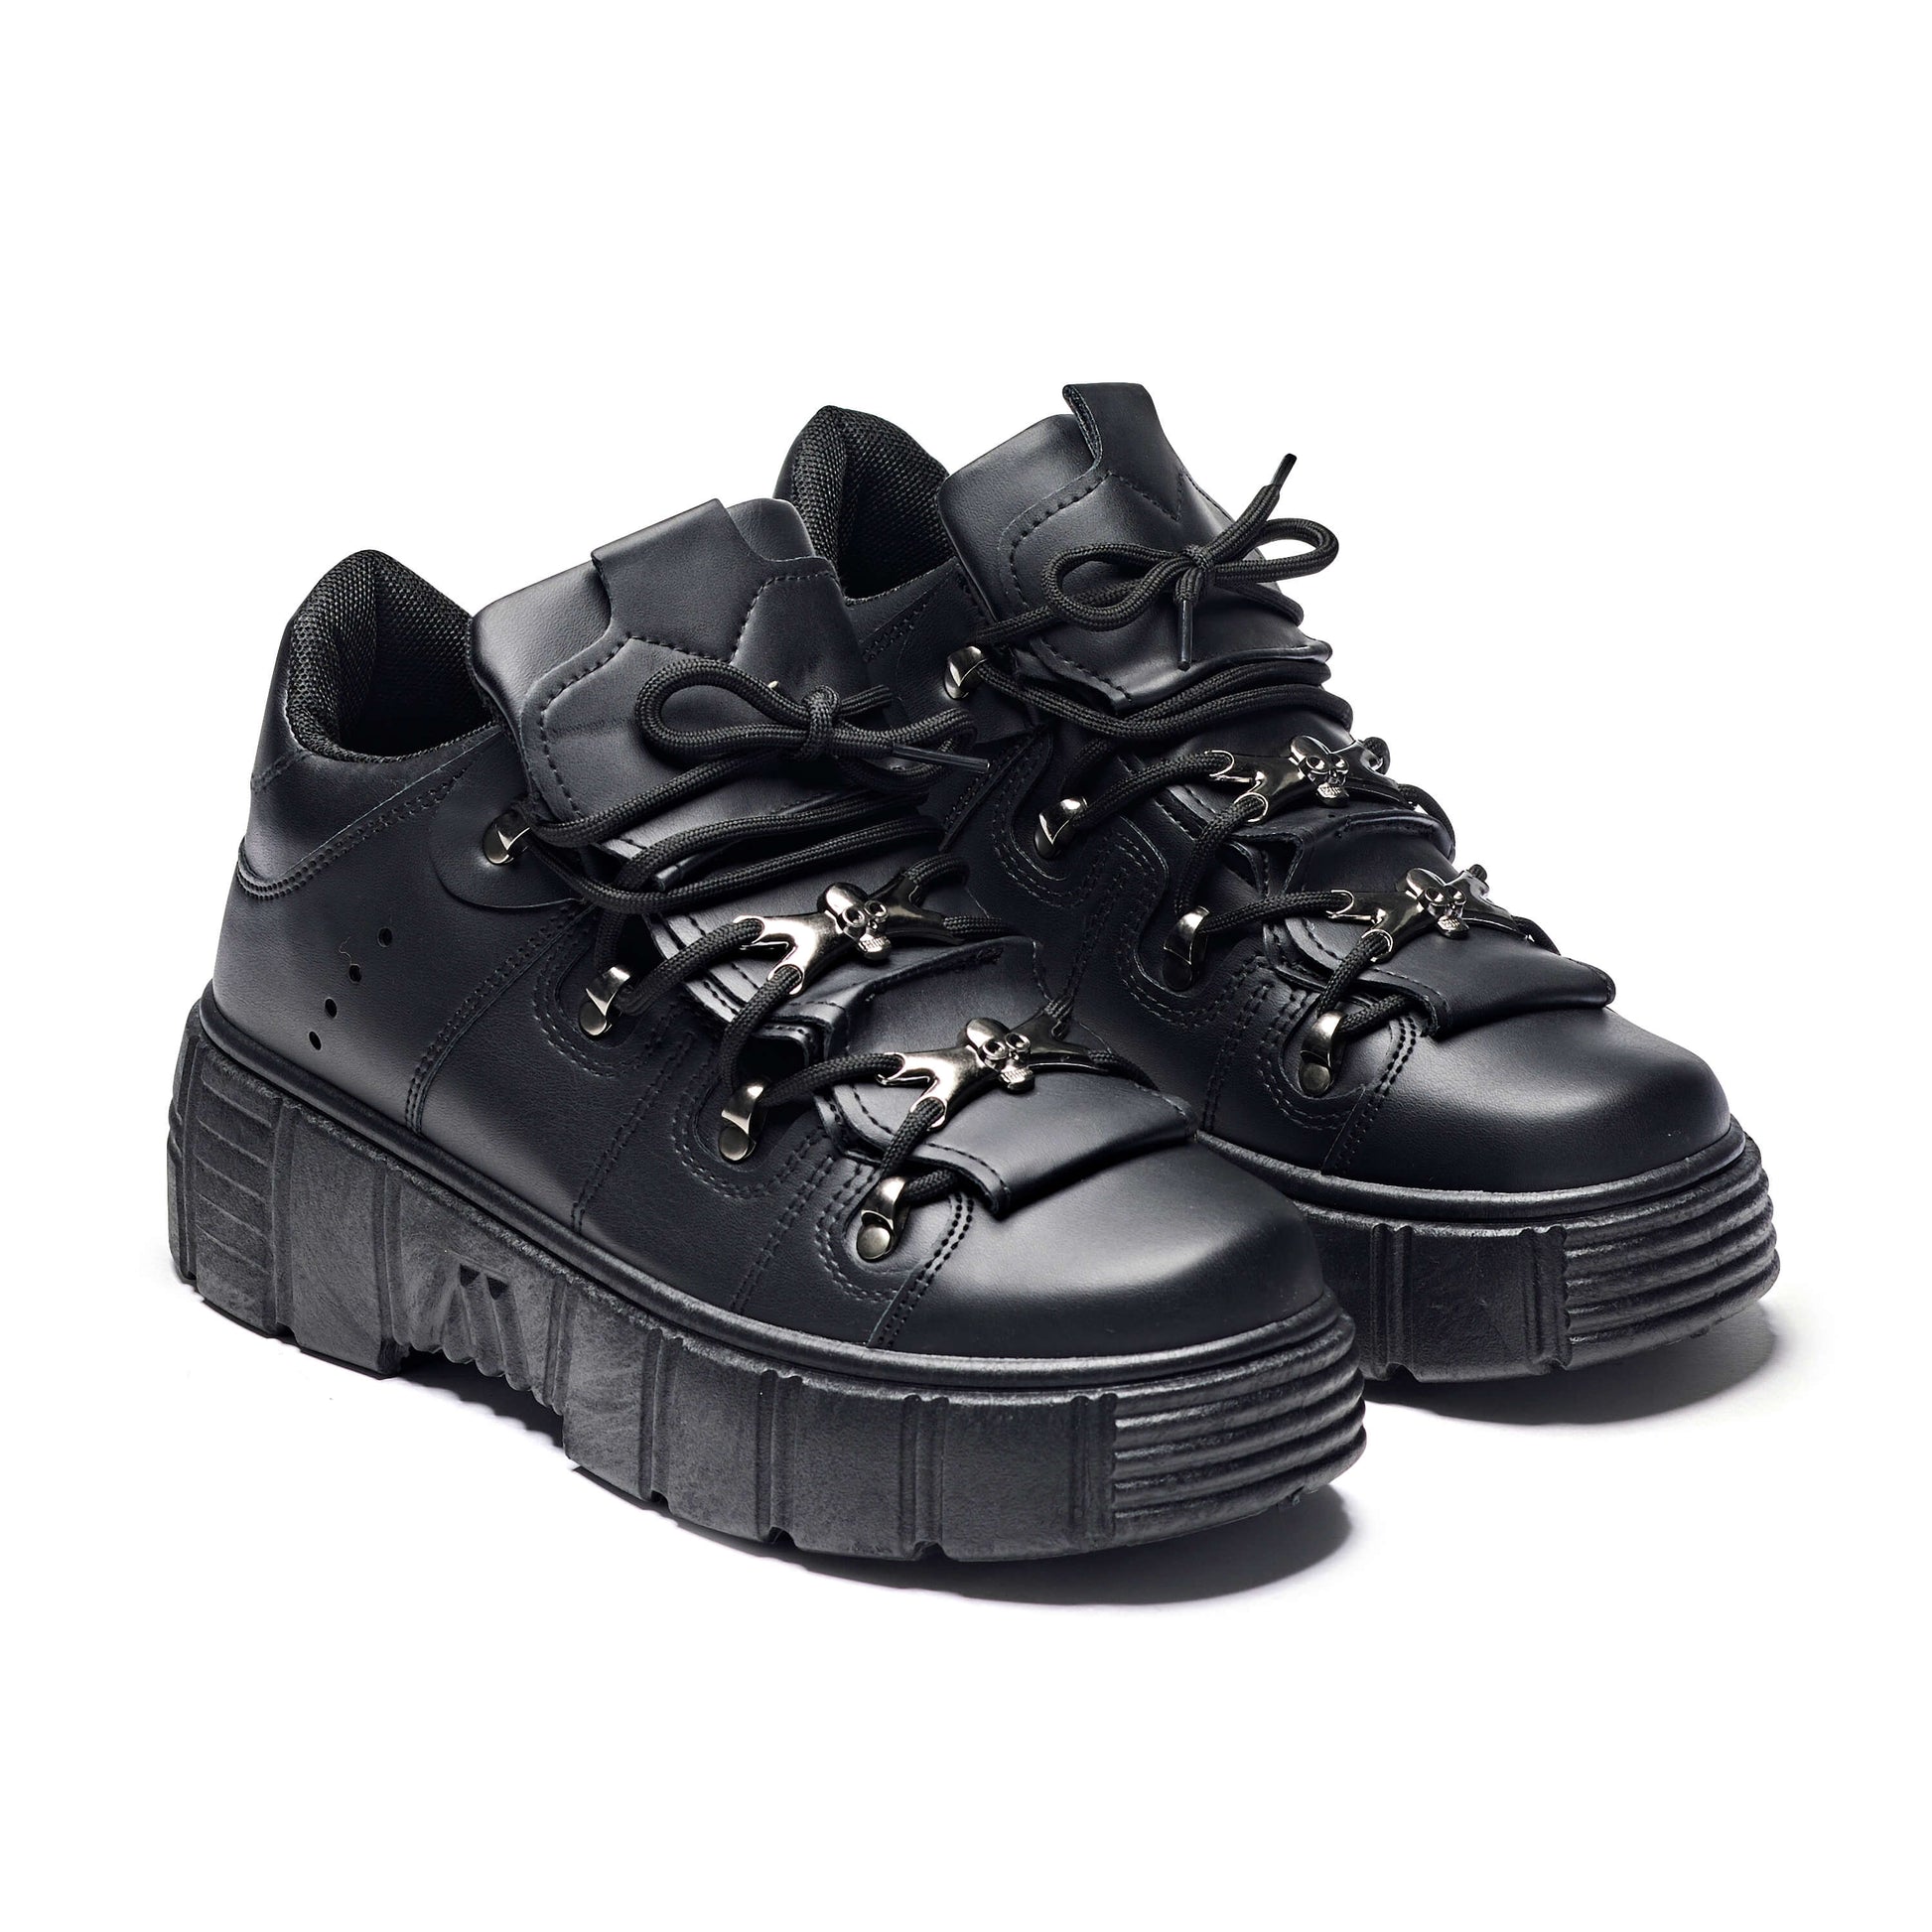 Rimo Core Chunky Black Trainers - Trainers - KOI Footwear - Black - Three-Quarter View